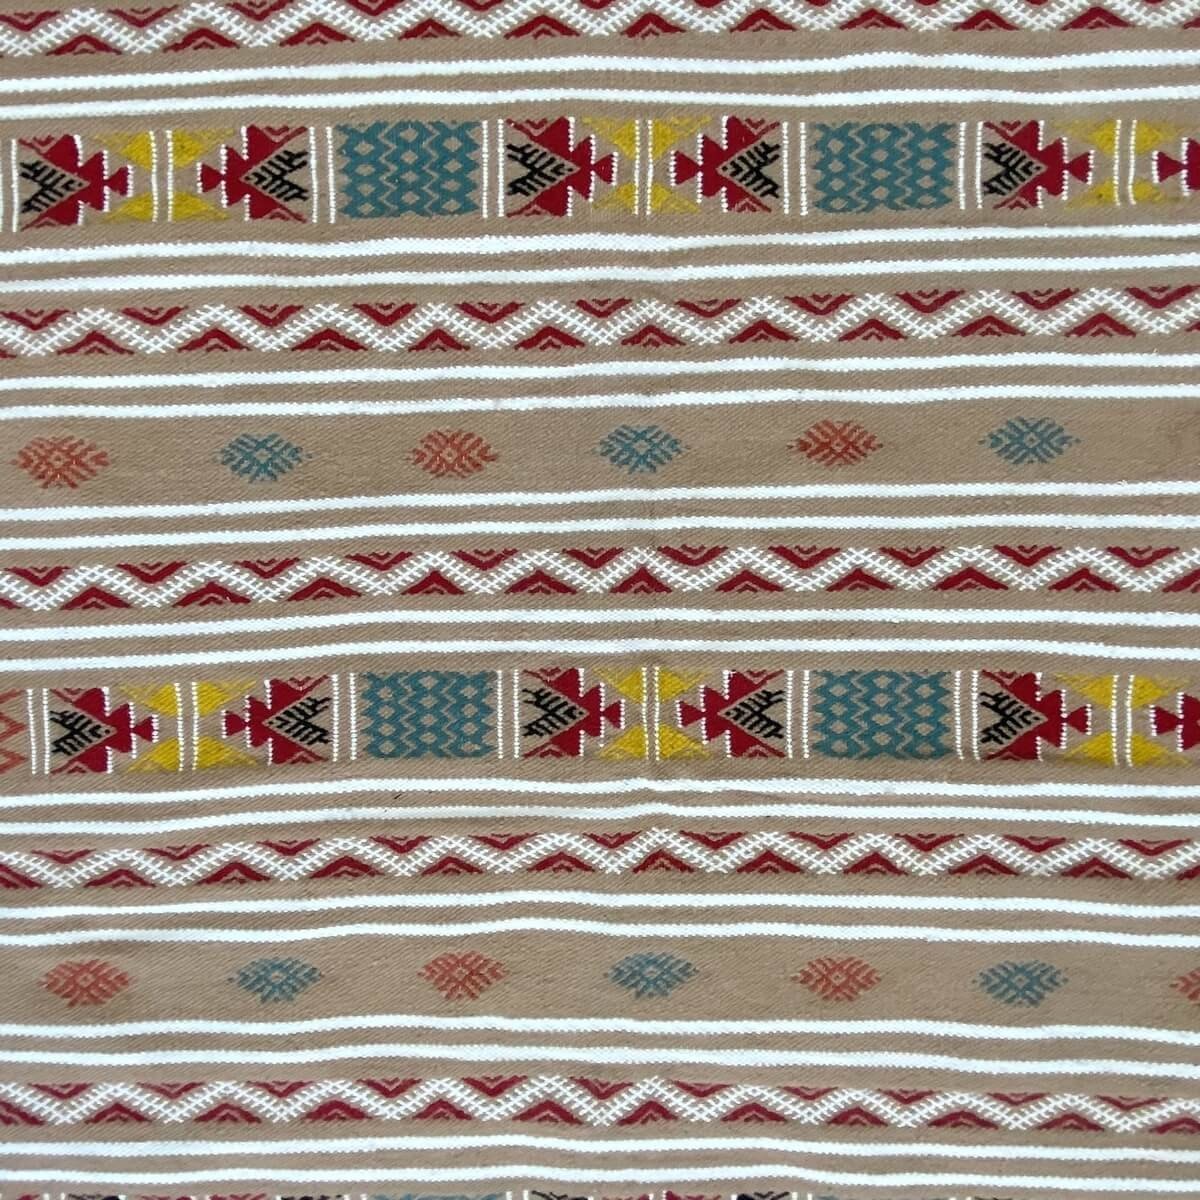 Berber tapijt Tapijt Kilim Azel 115x215 Beige/Veelkleurig (Handgeweven, Wol, Tunesië) Tunesisch kilimdeken, Marokkaanse stijl. R